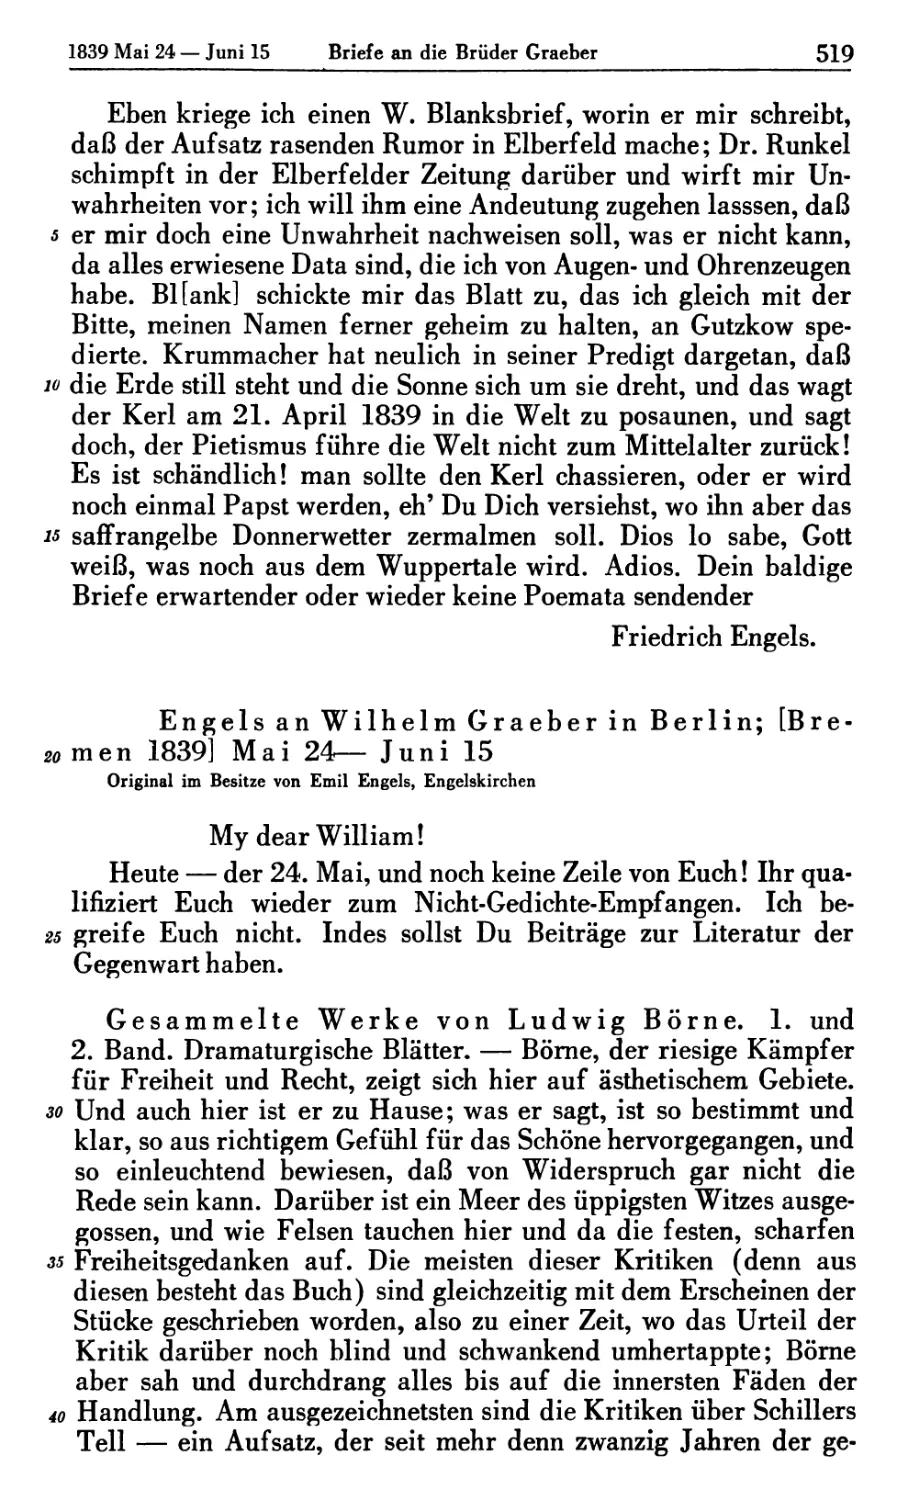 Engels an Wilhelm Graeber in Berlin; [Bremen 1839] Mai 24 -Juni 15